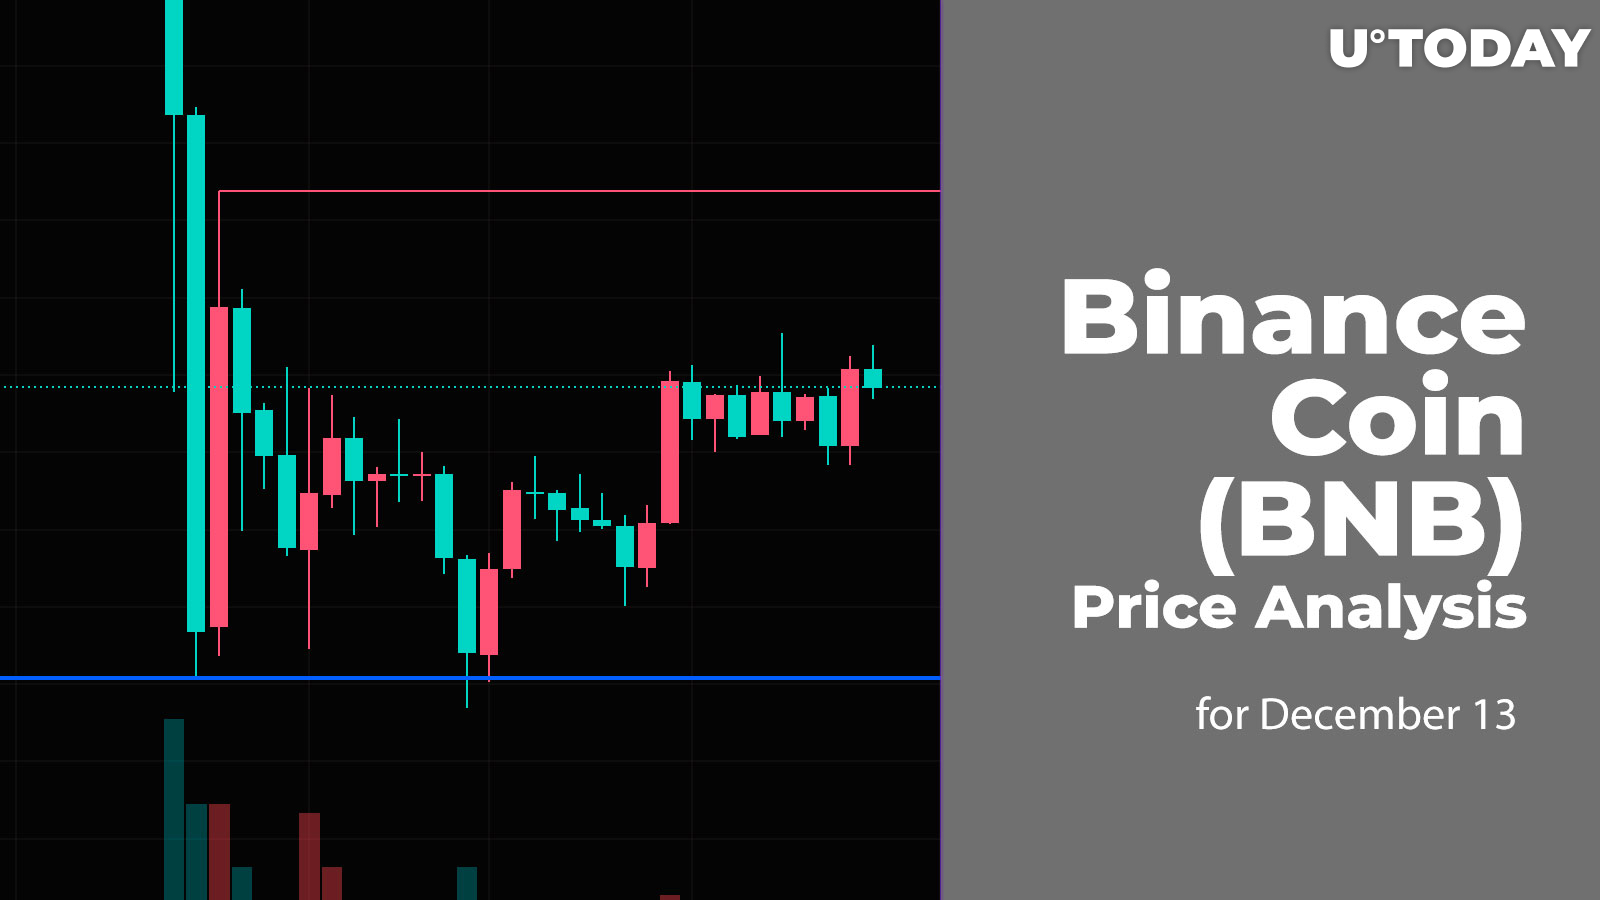 Binance Coin (BNB) Price Analysis for December 13